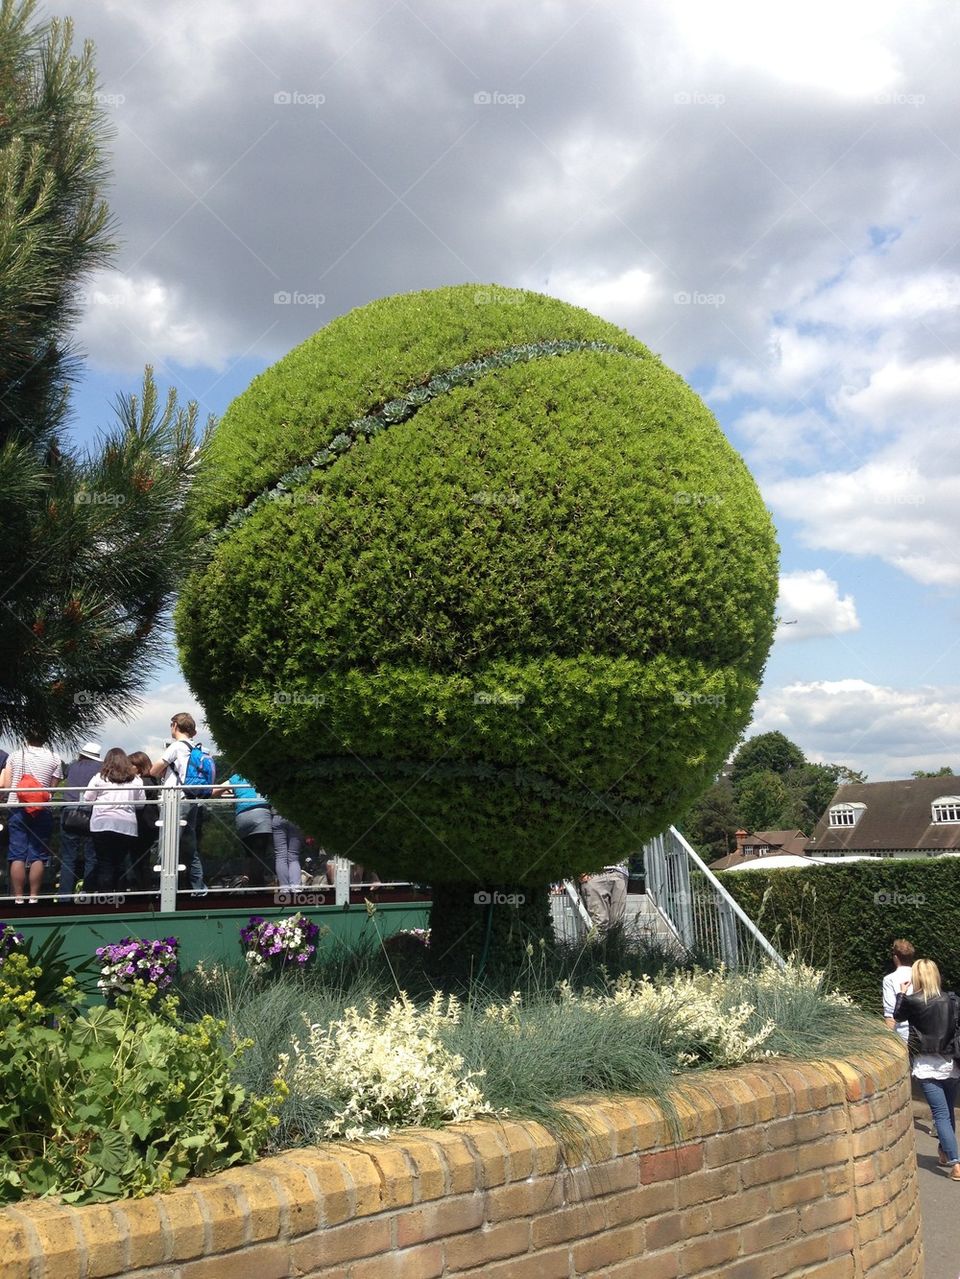 Tennis ball garden